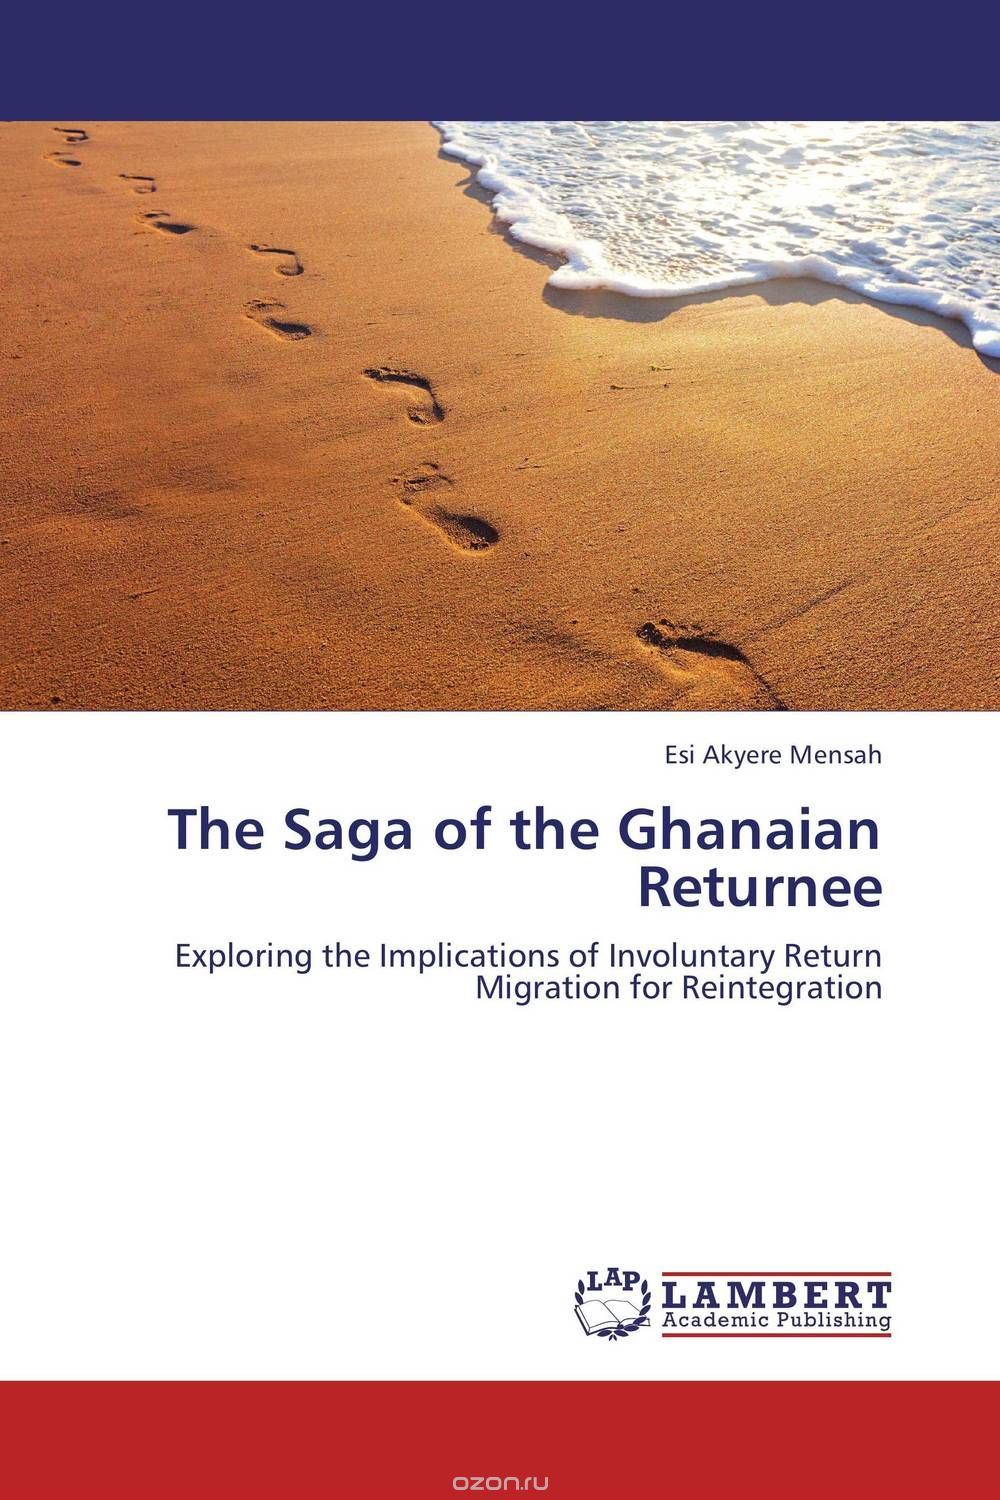 Скачать книгу "The Saga of the Ghanaian Returnee"